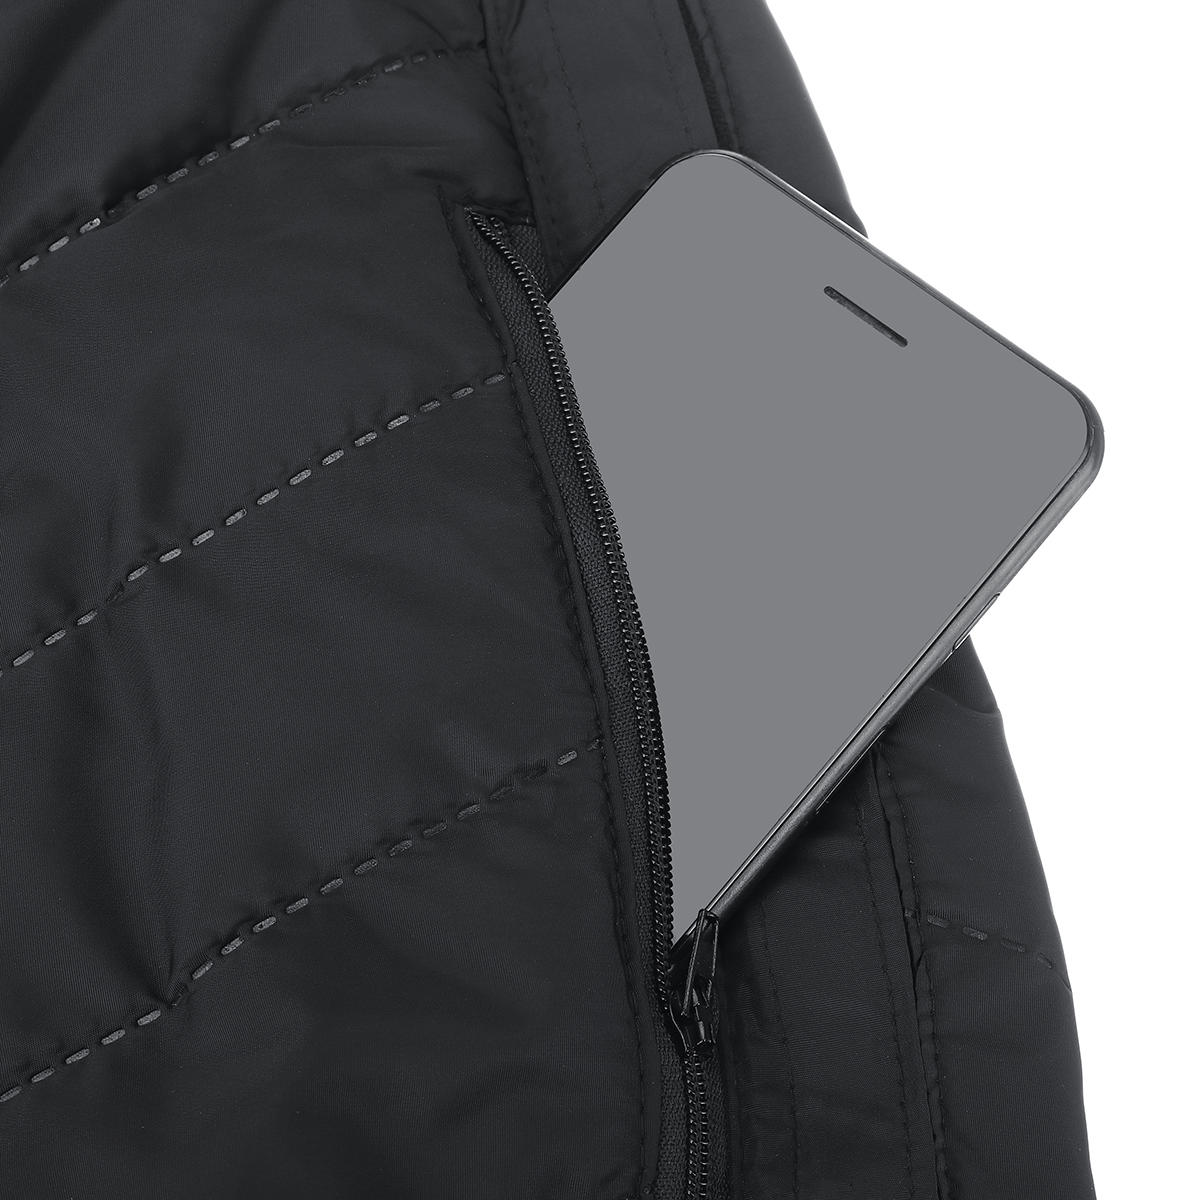 Electric Vest Heated Cloth Jacket USB Warm Up Heating Pad Winter Warmer Men